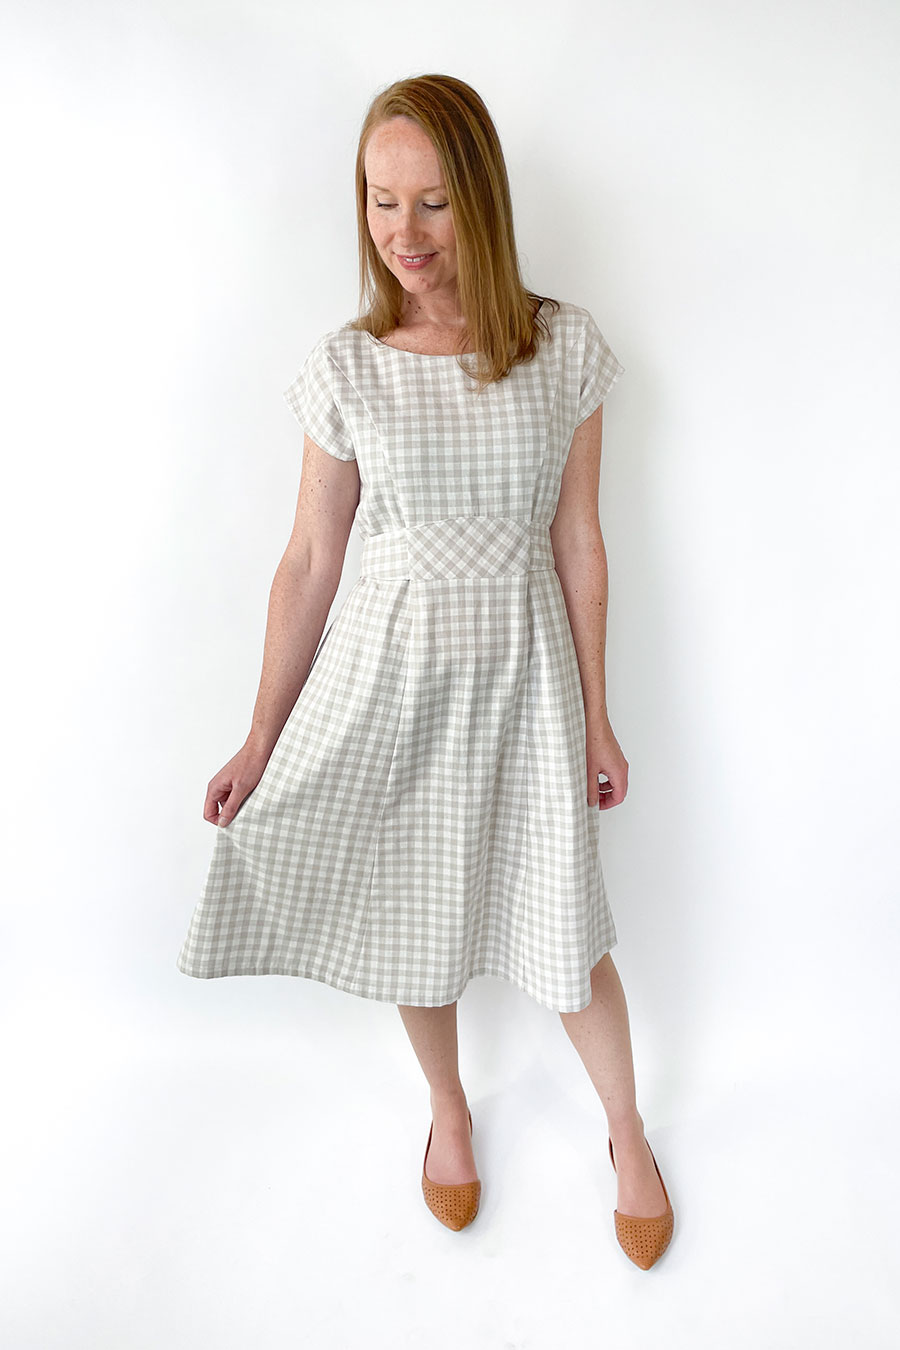 Jennifer Lauren Handmade Kinfolk Dress